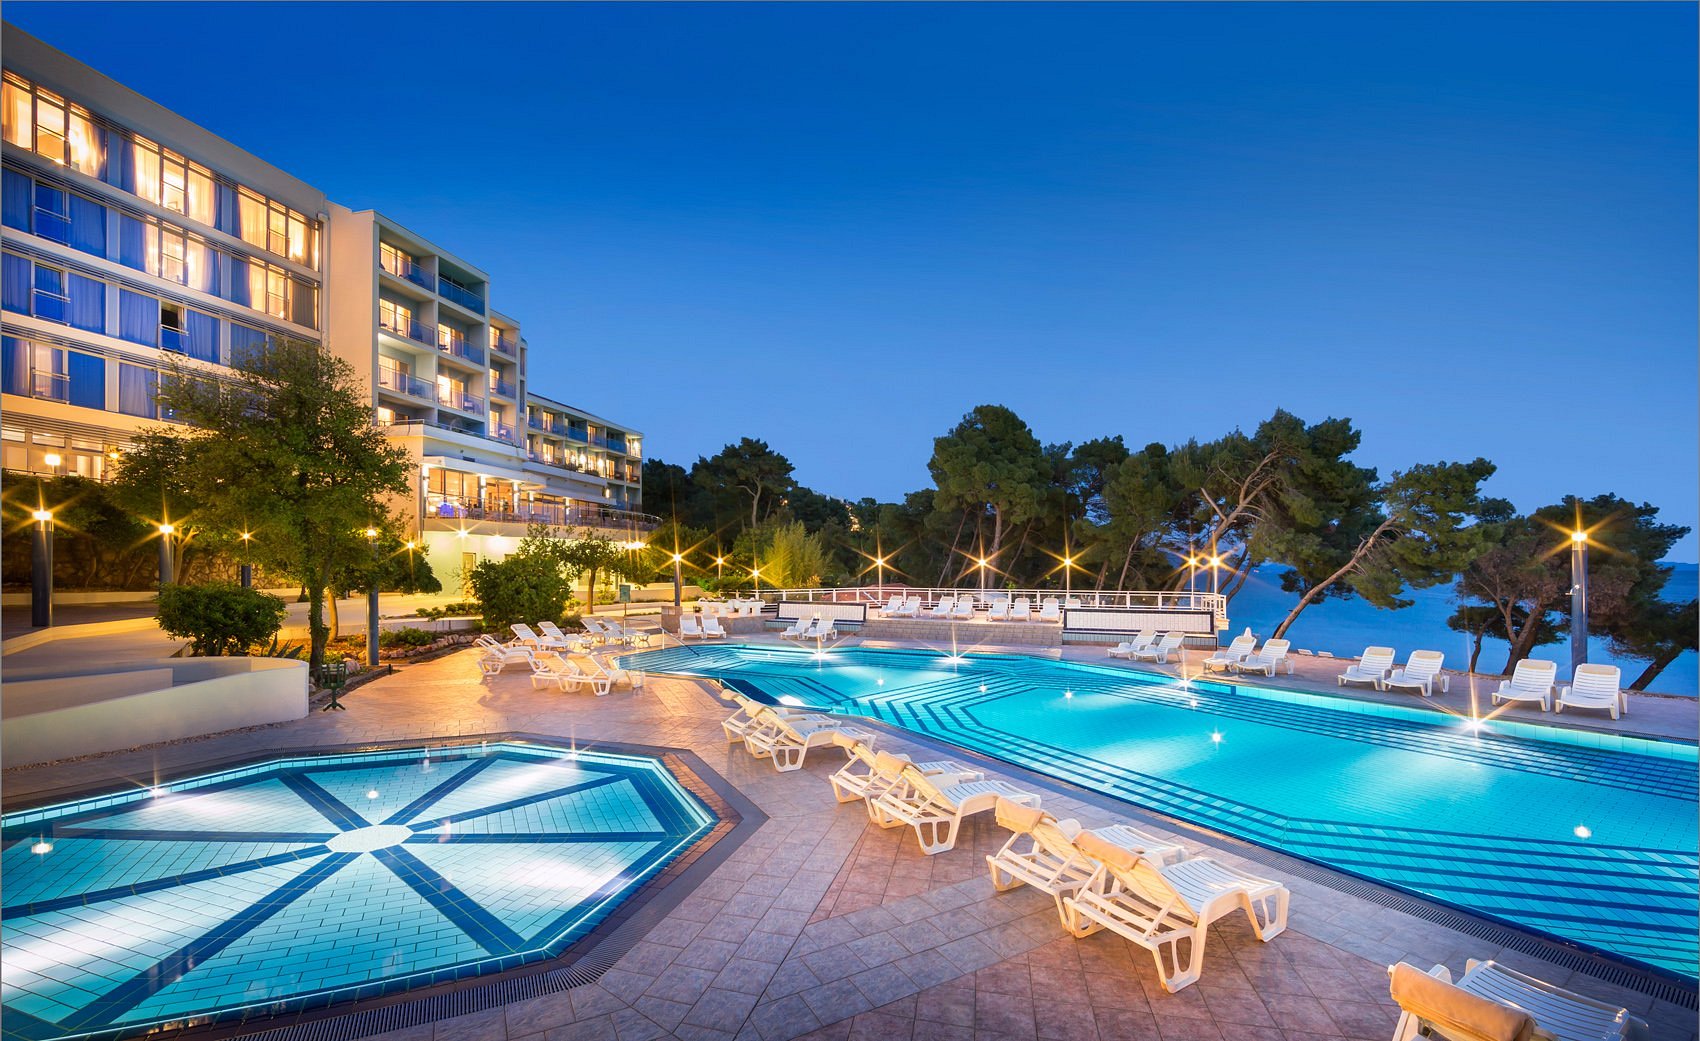 Azur hotel. Aminess. Montenegro Azur Hotel. Самый большой бассейн на Ближнем востоке Grand Azur;.